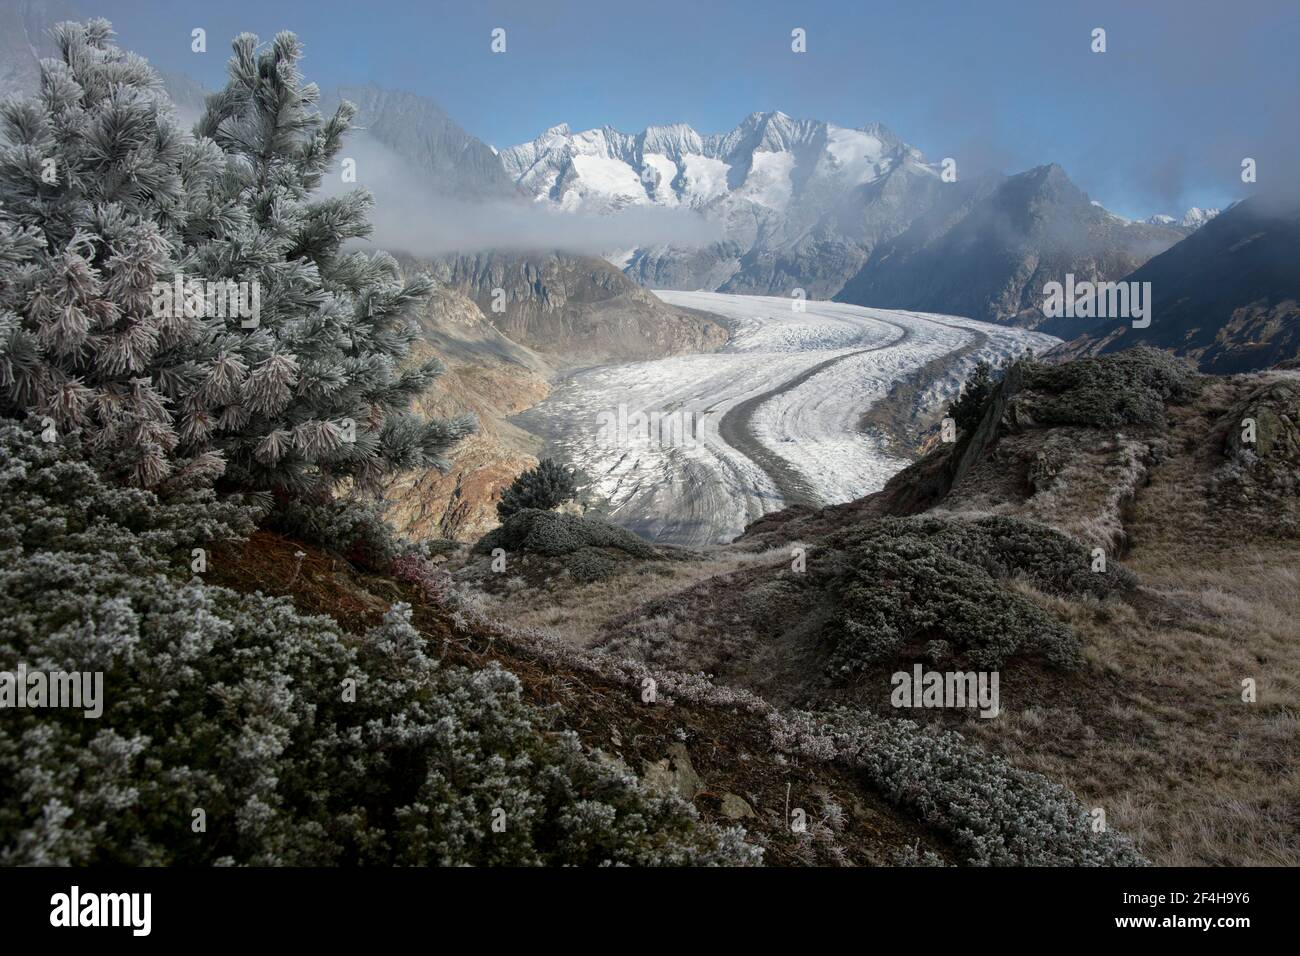 Eindrücke aus dem Unesco-Welterbe Aletsch, grosses Schutzgebiet um den grössten Gletscher der Alpen Foto de stock